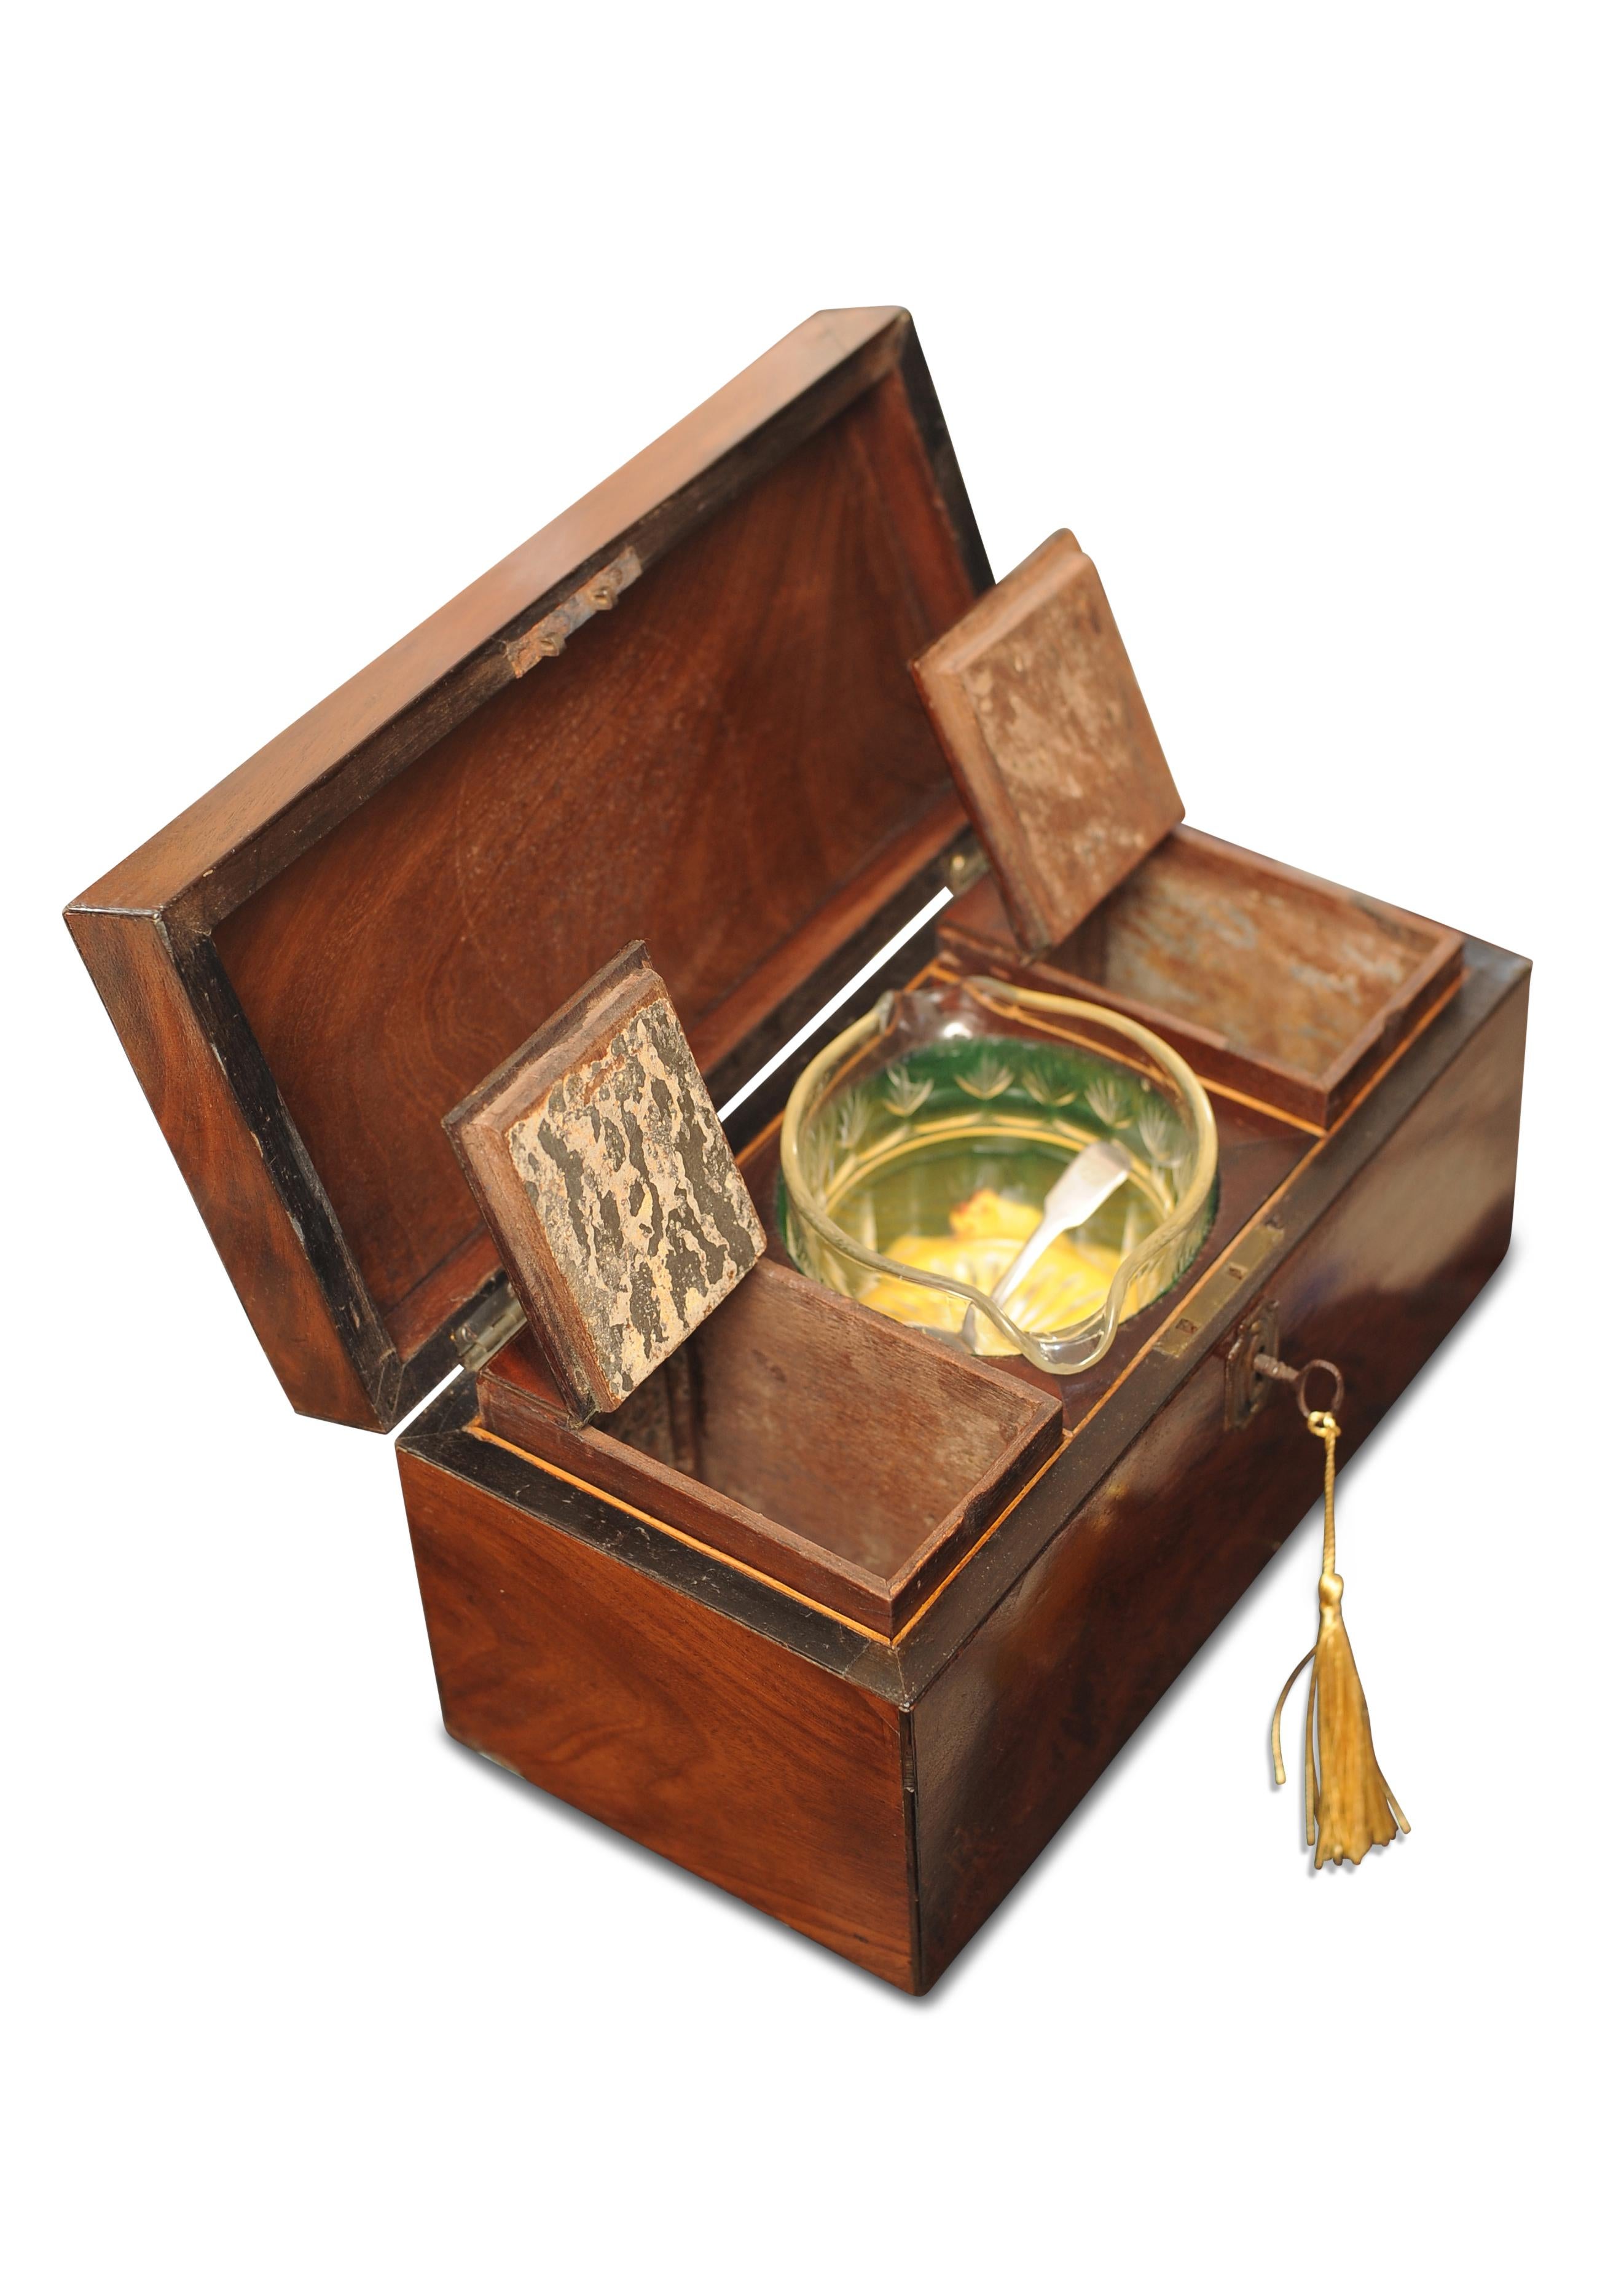 Veneer Early 19th Century Regency Period Flame Mahogany Tea Caddy Box For Sale